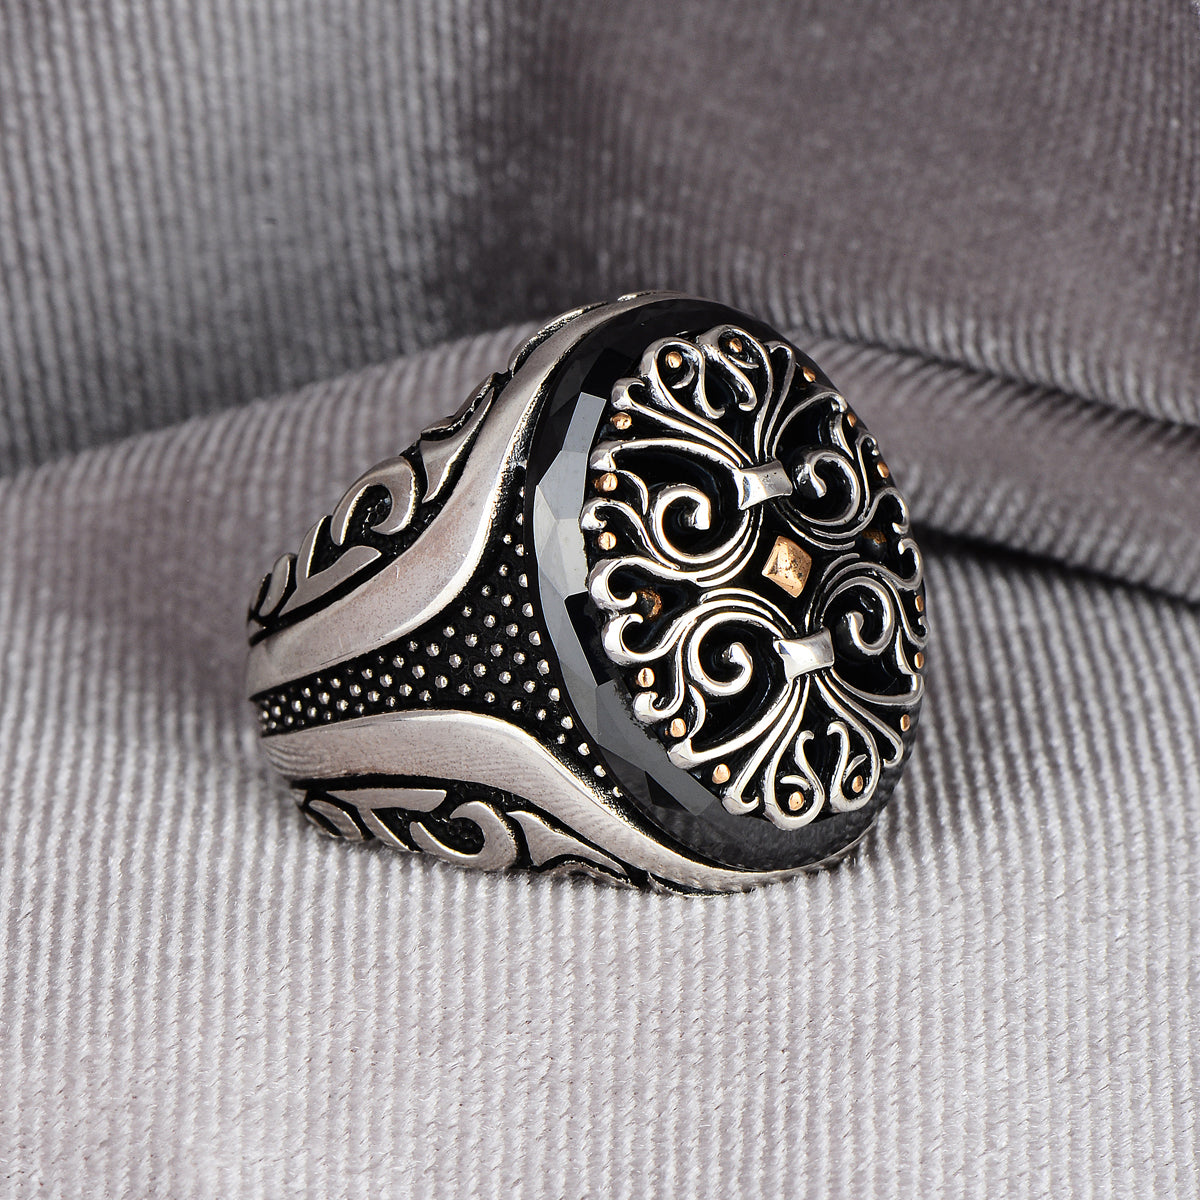 Silver Handmade Black Zircon Stone Ottoman Ring